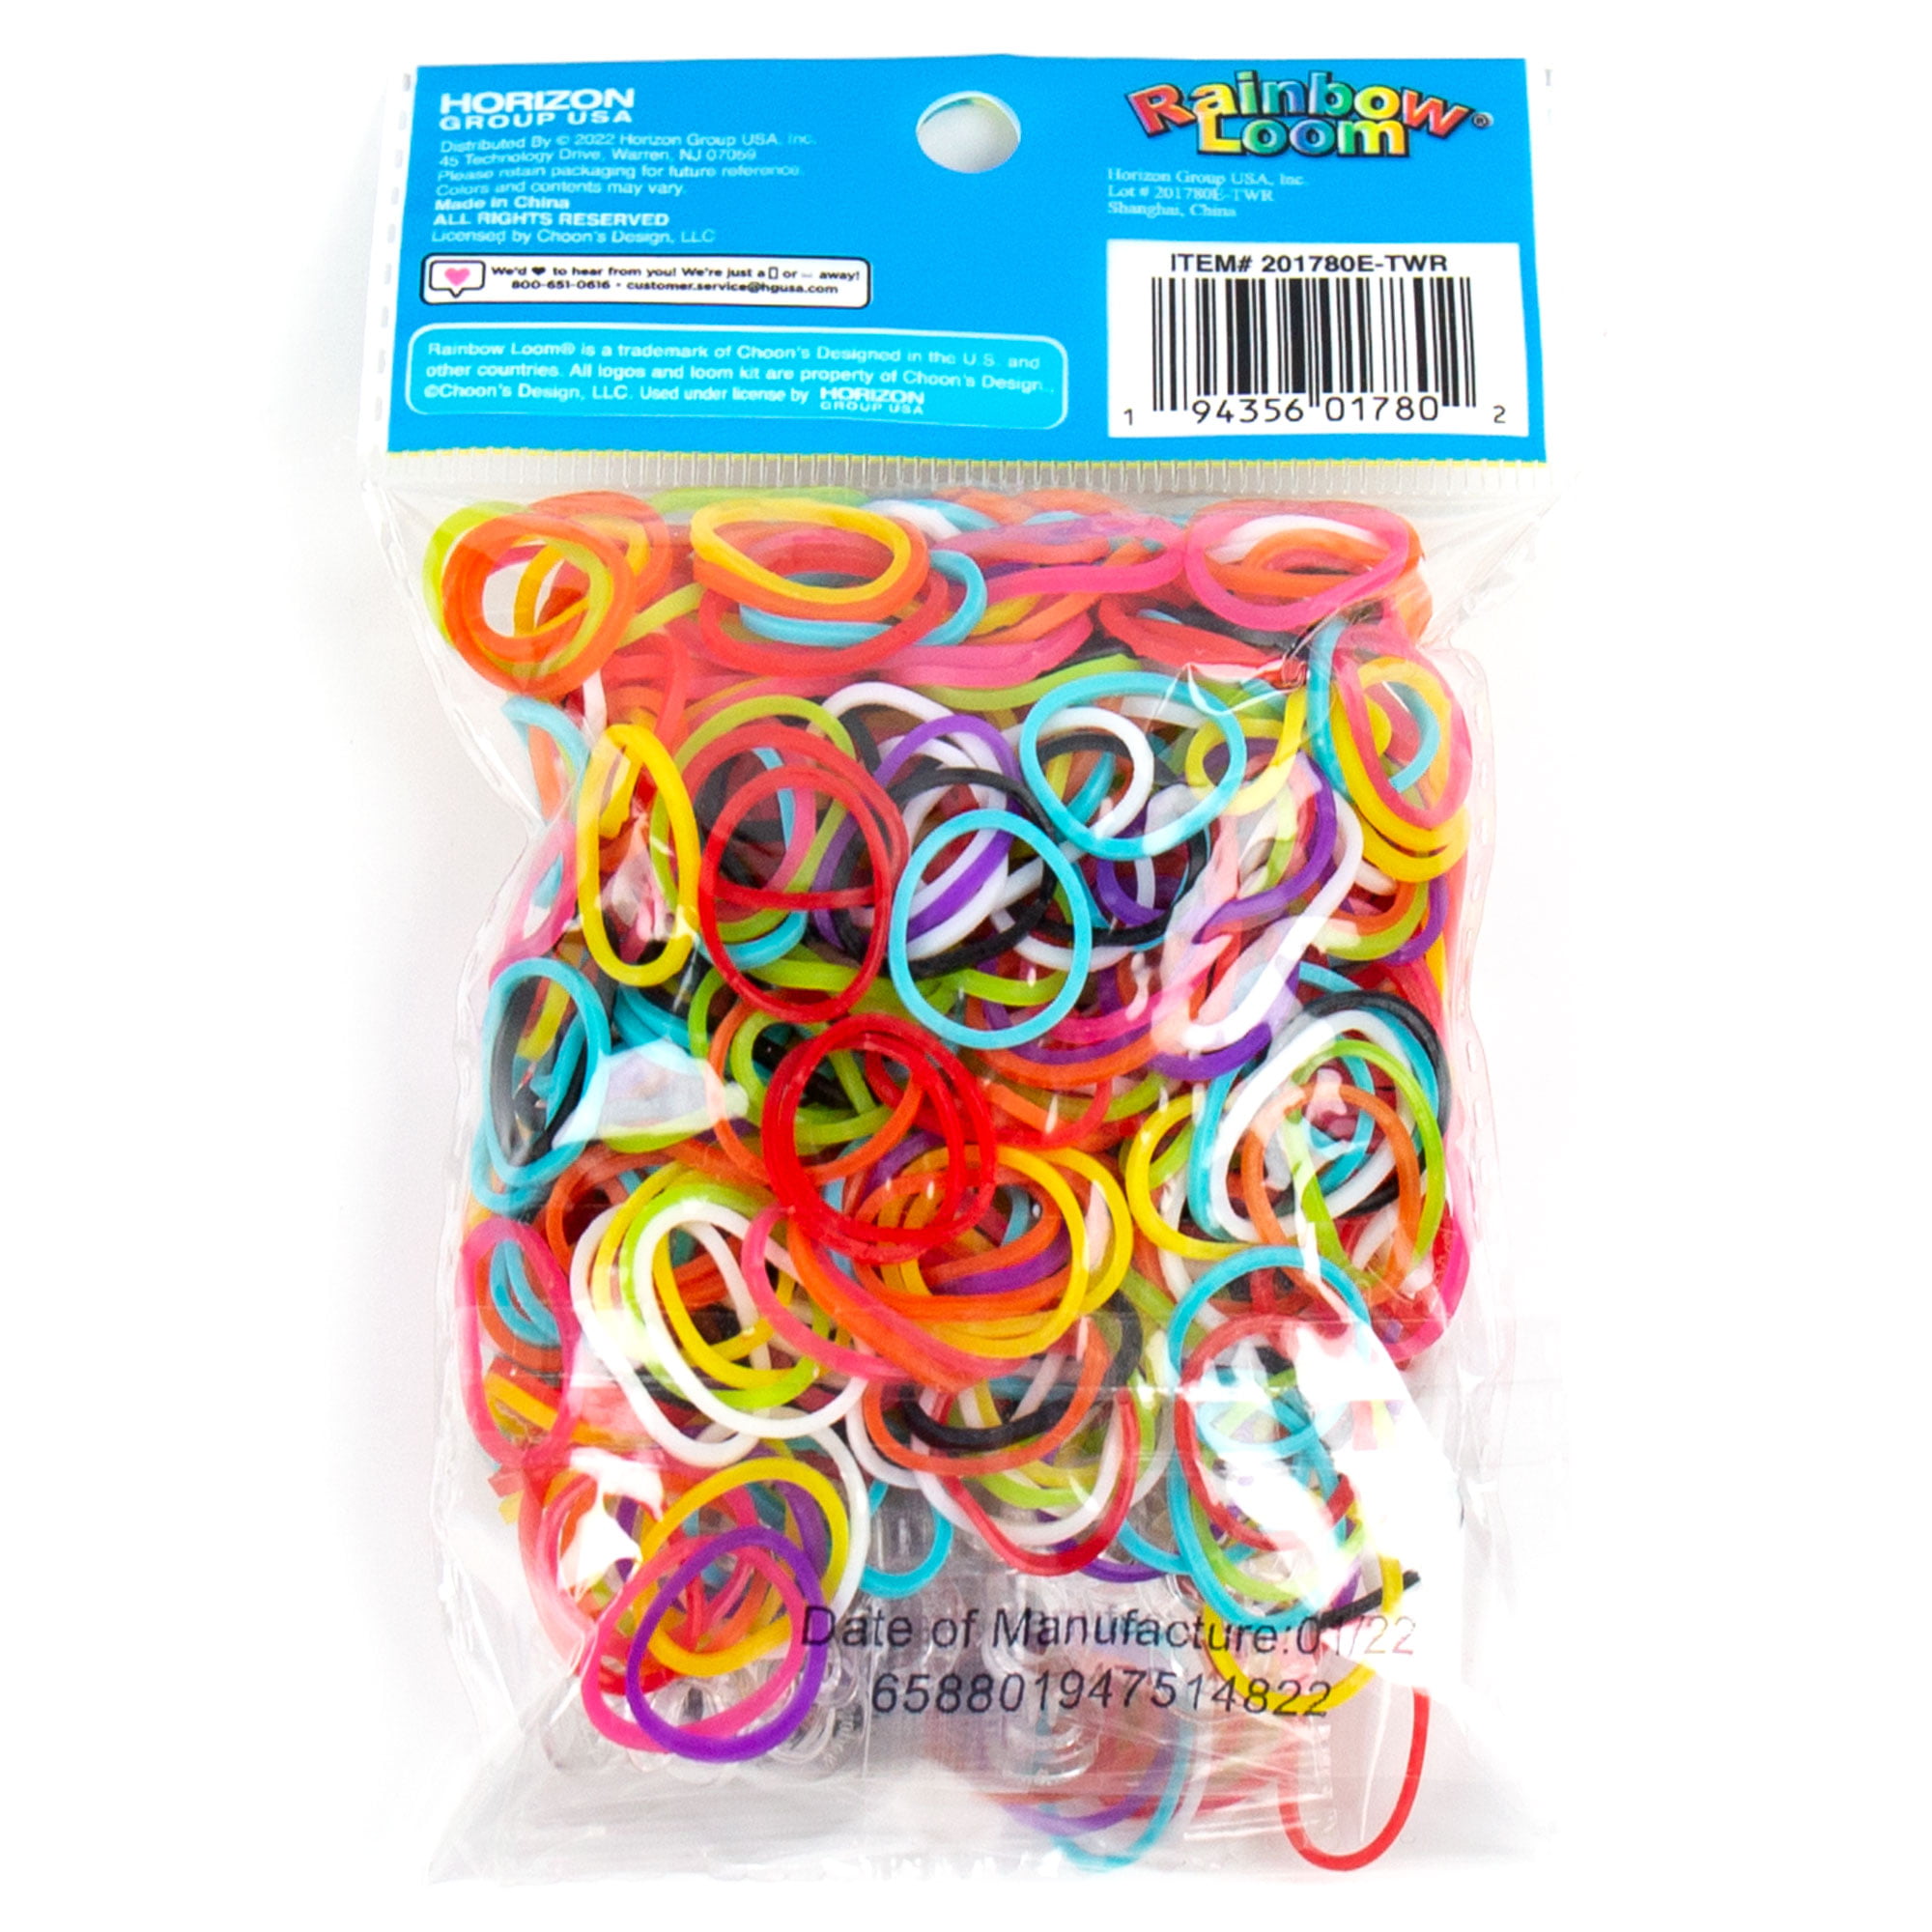 Rainbow Loom Bracelet Making Kit Crafts Kids Hobby 600+ Latex Free Rubber  Band 670541160183 